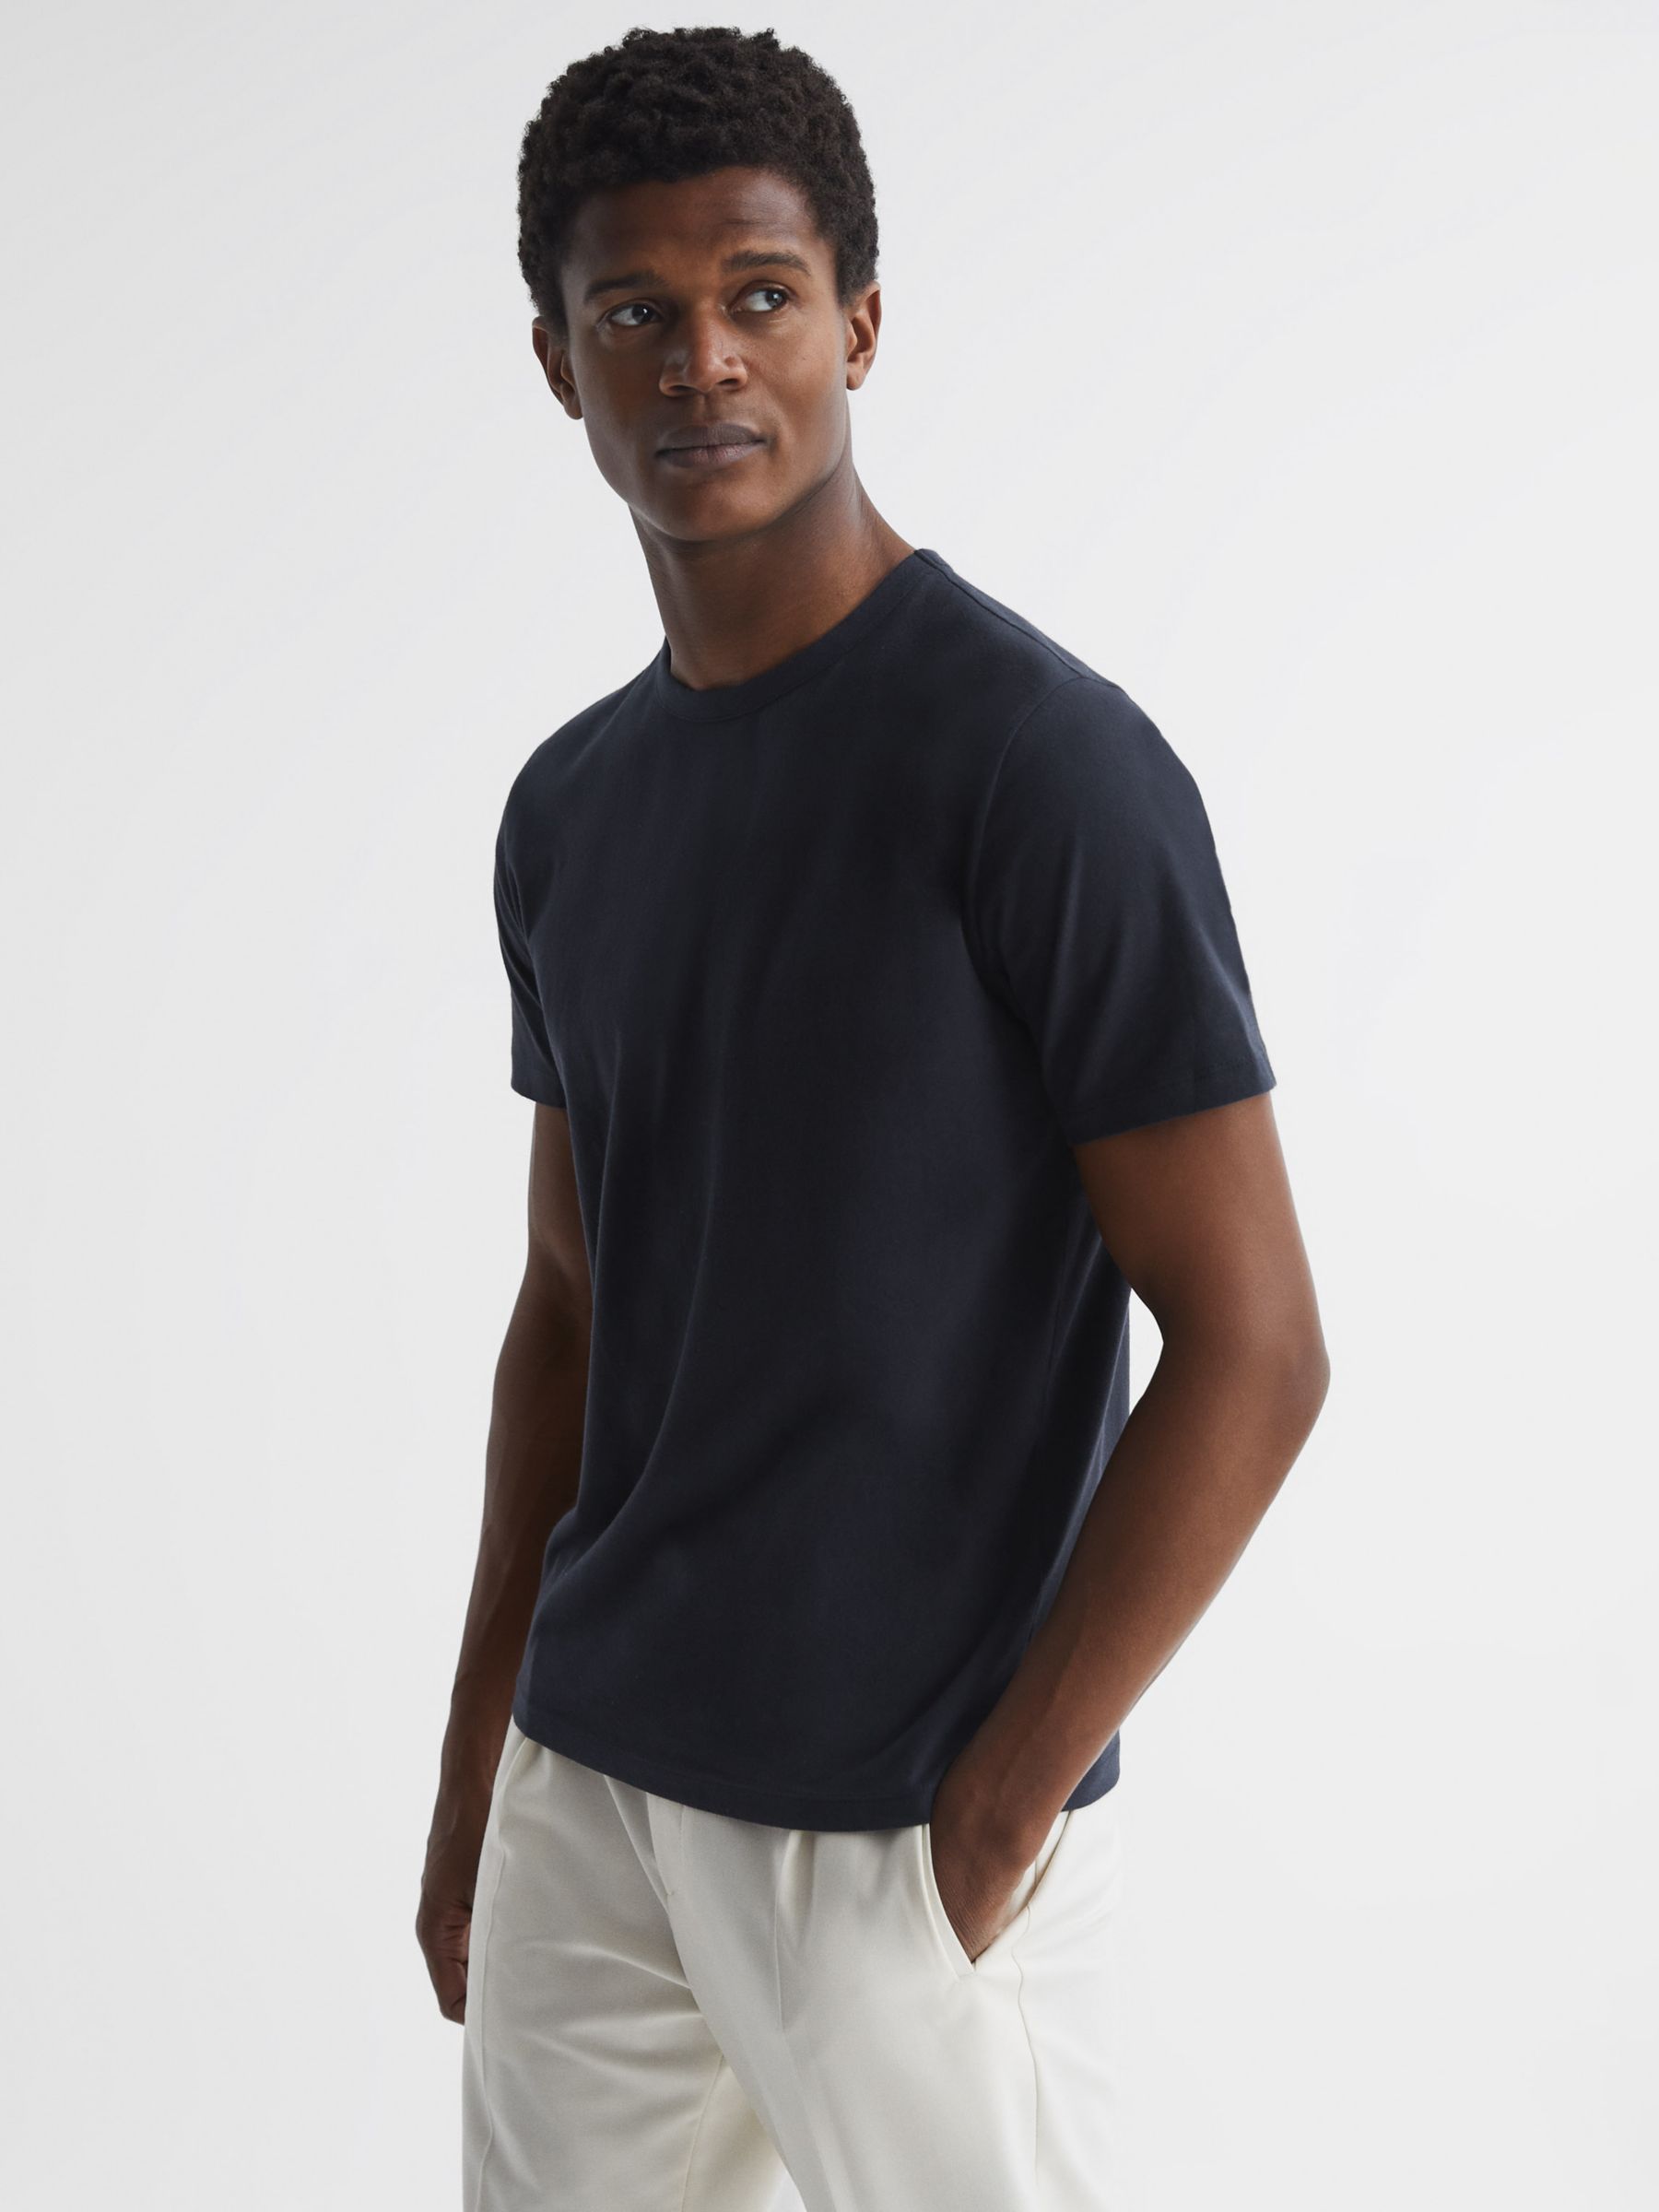 Reiss Melrose Cotton Crew Neck T-Shirt, Navy at John Lewis & Partners